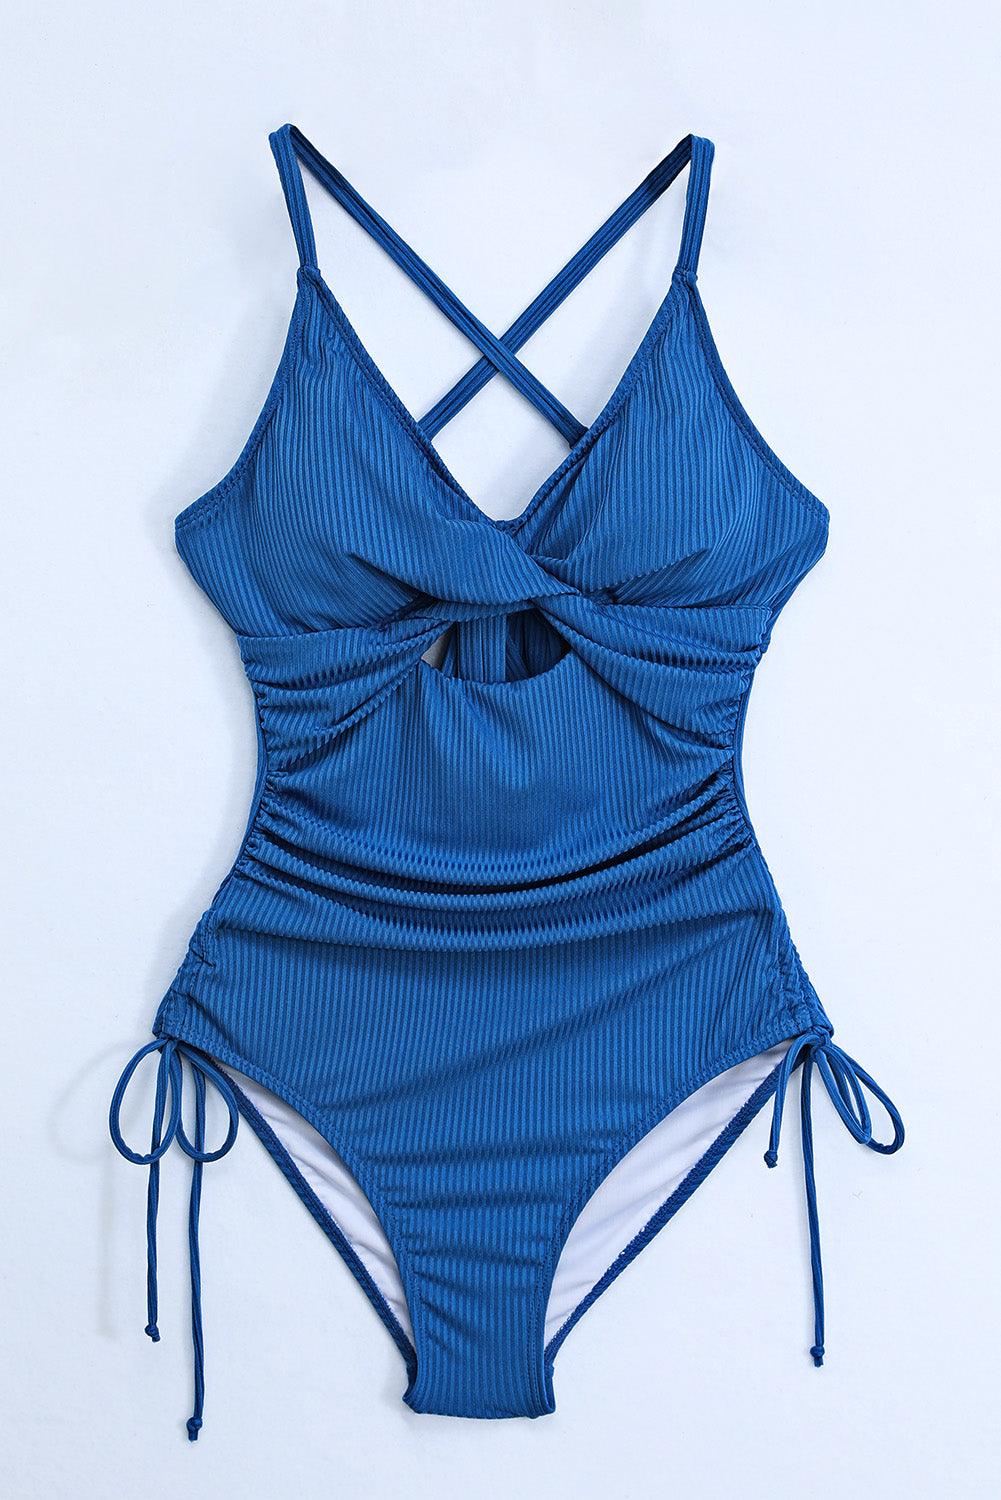 Bona Fide Fashion - Cutout V-Neck Spaghetti Strap One-Piece Swimwear - Women Fashion - Bona Fide Fashion